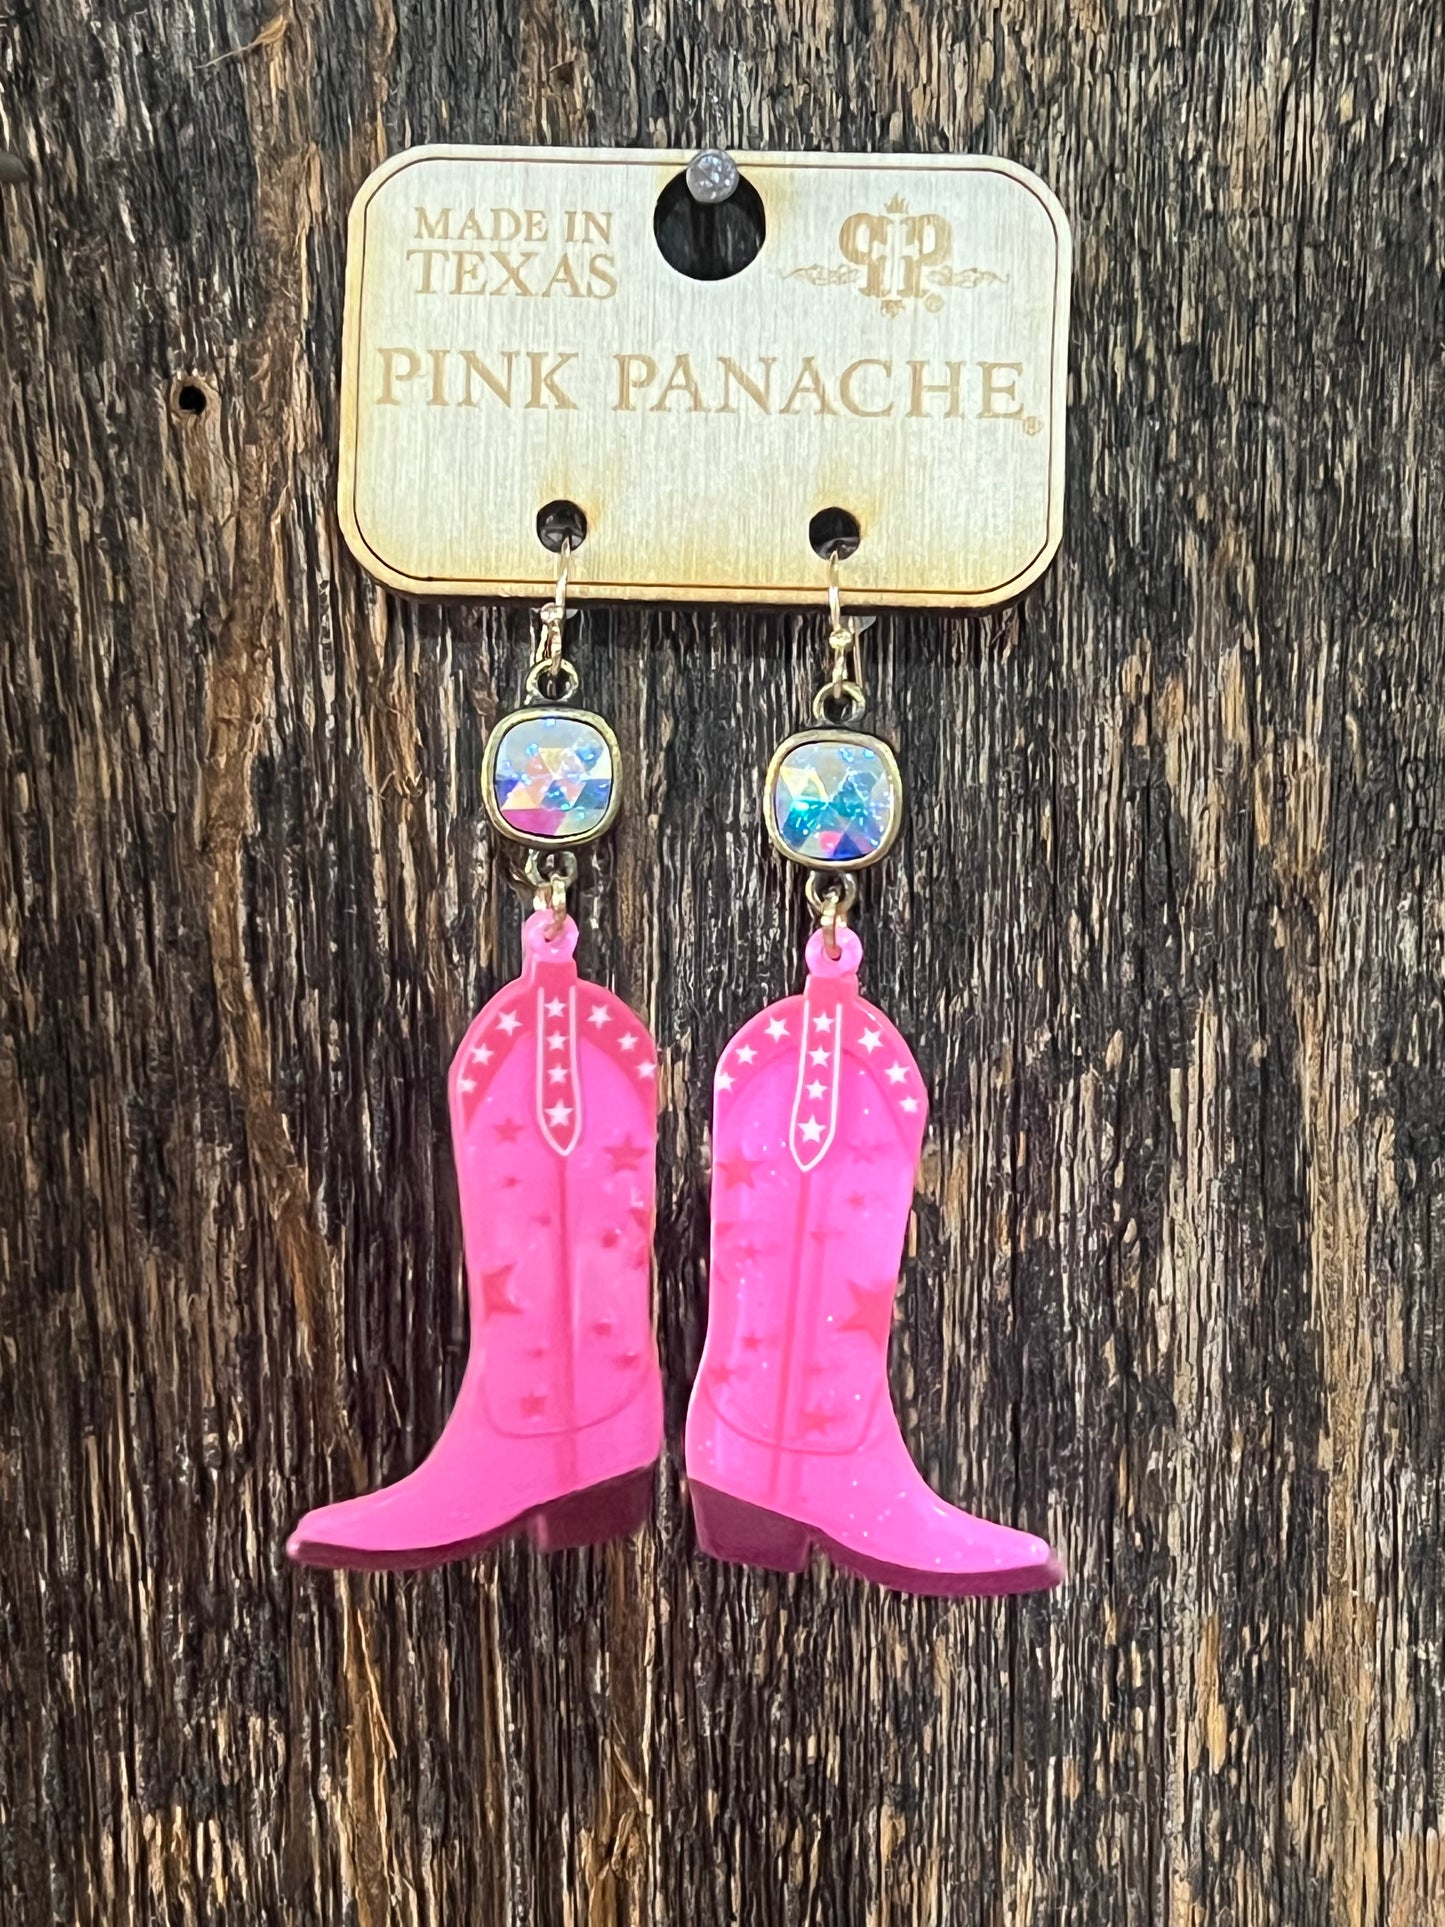 Pink panache Cowboy boot earrings